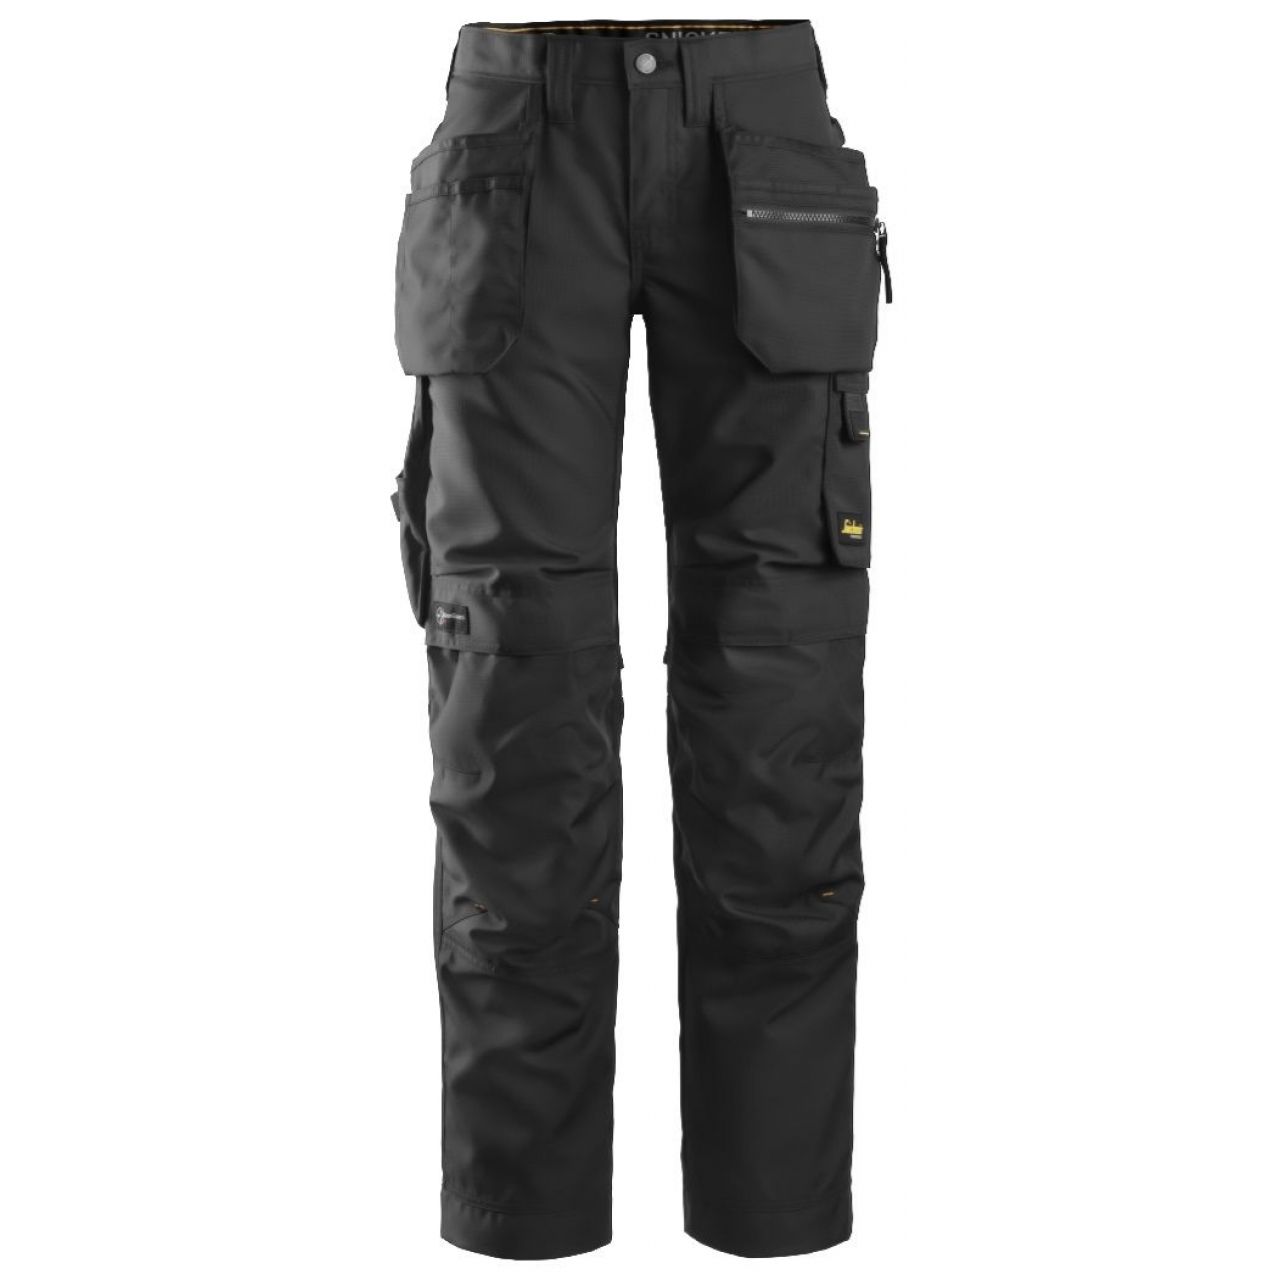 Pantalon de mujer AllroundWork+ con bolsillos flotantes negro talla 084